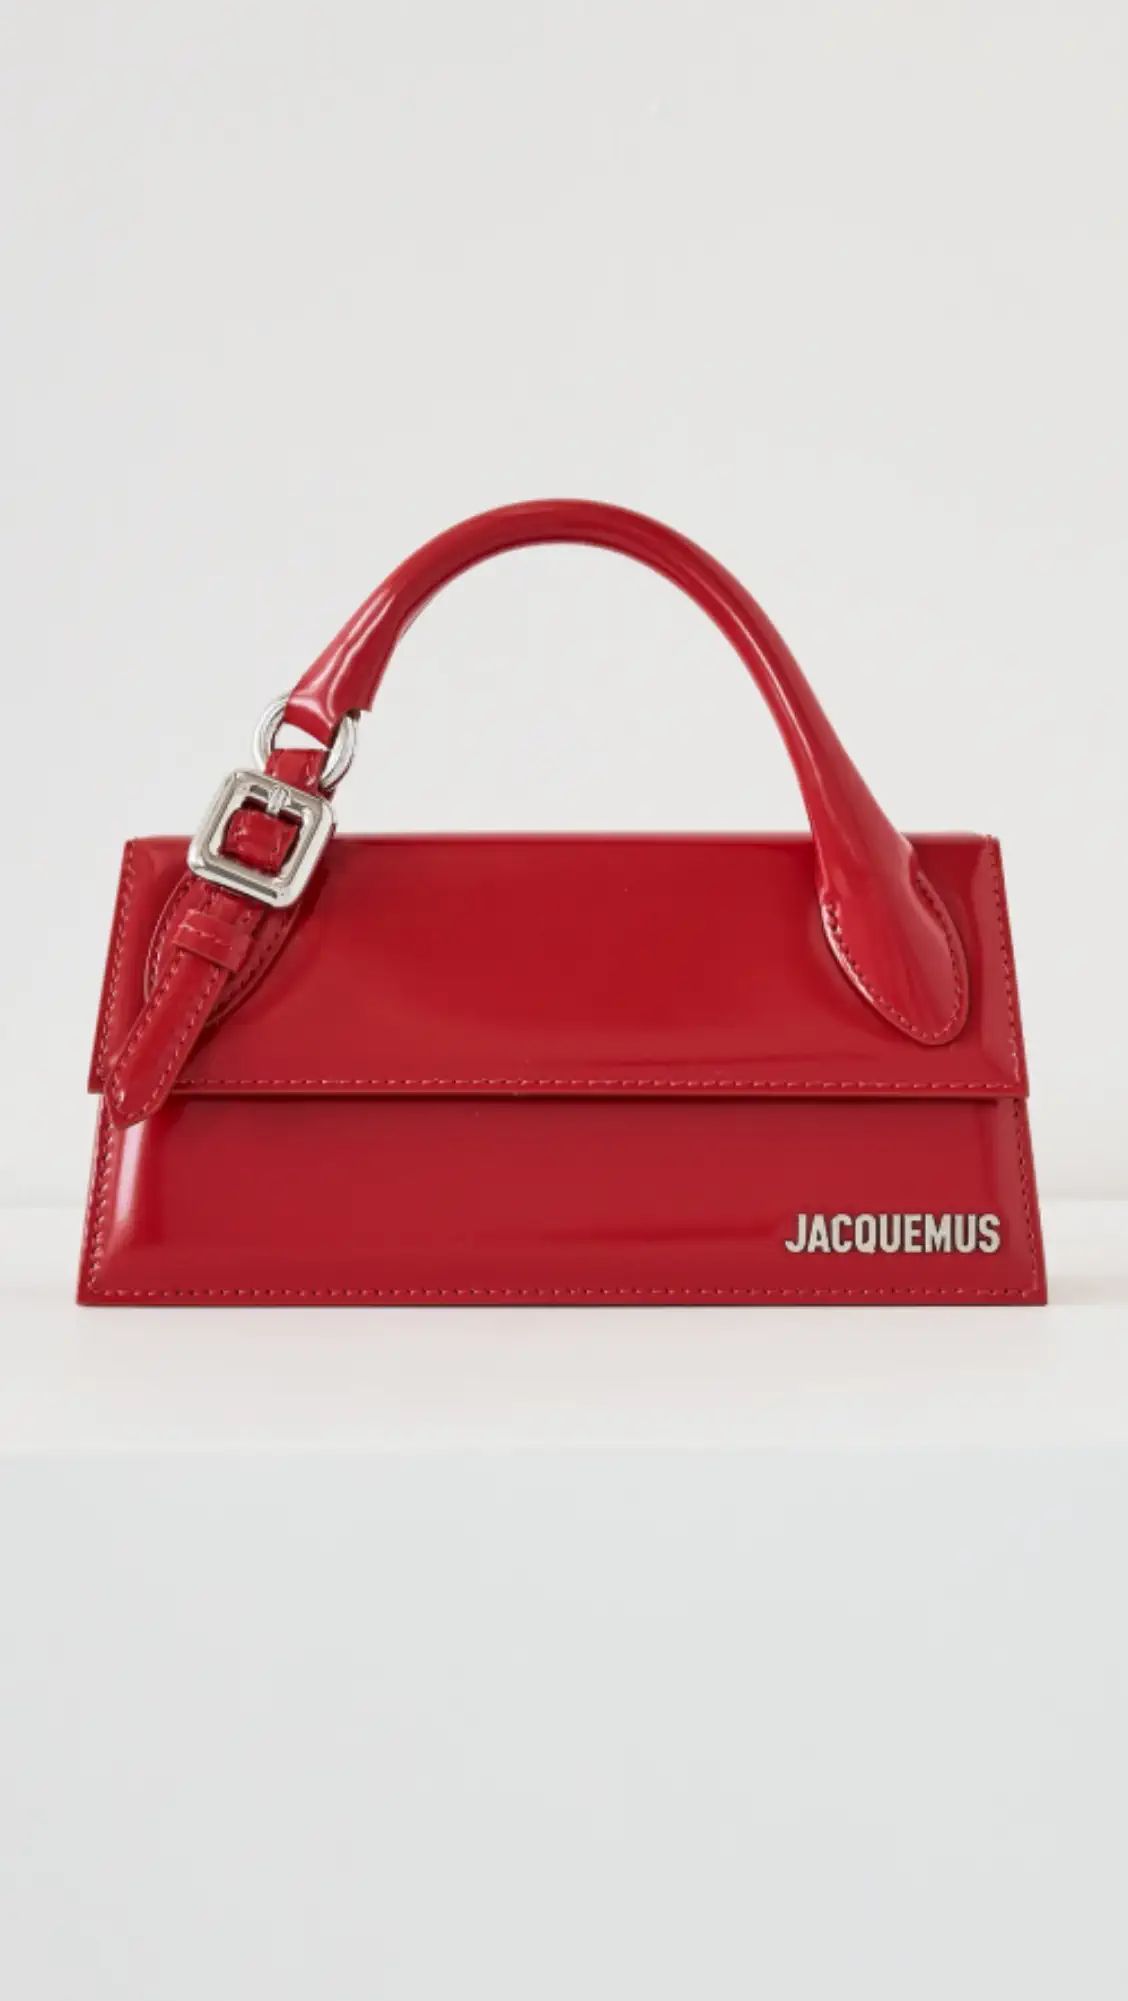 Jacquemus | Shopbop